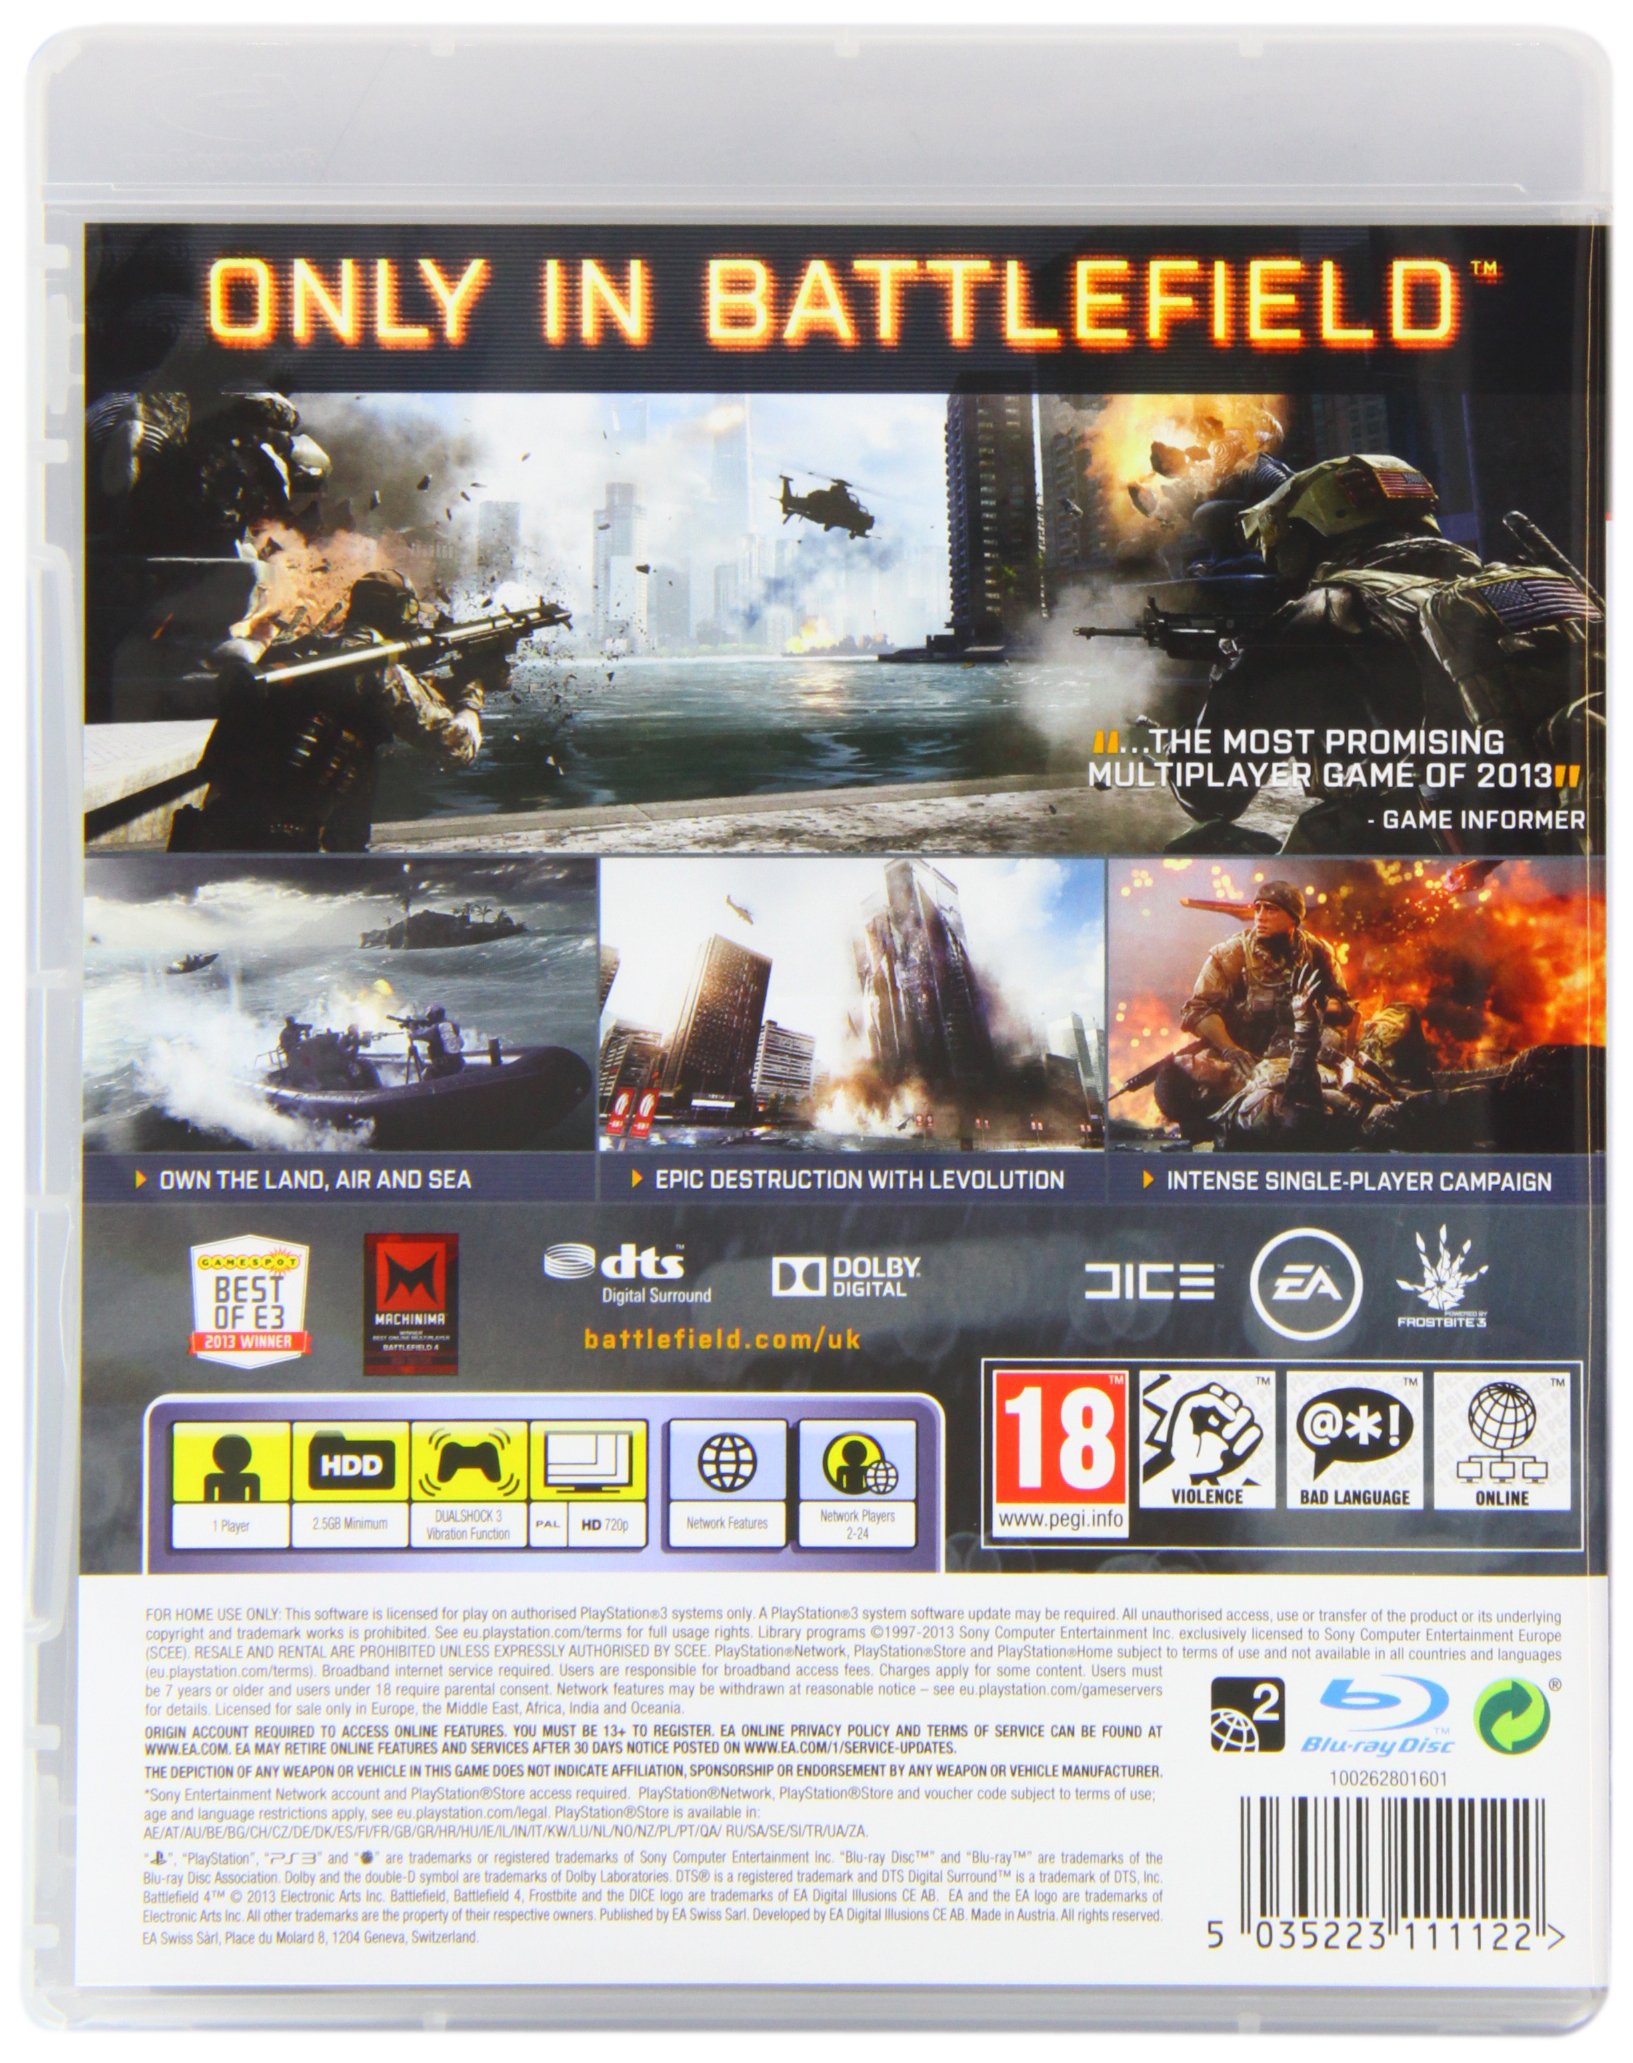 Battlefield 4 - Standard Edition (PS3)